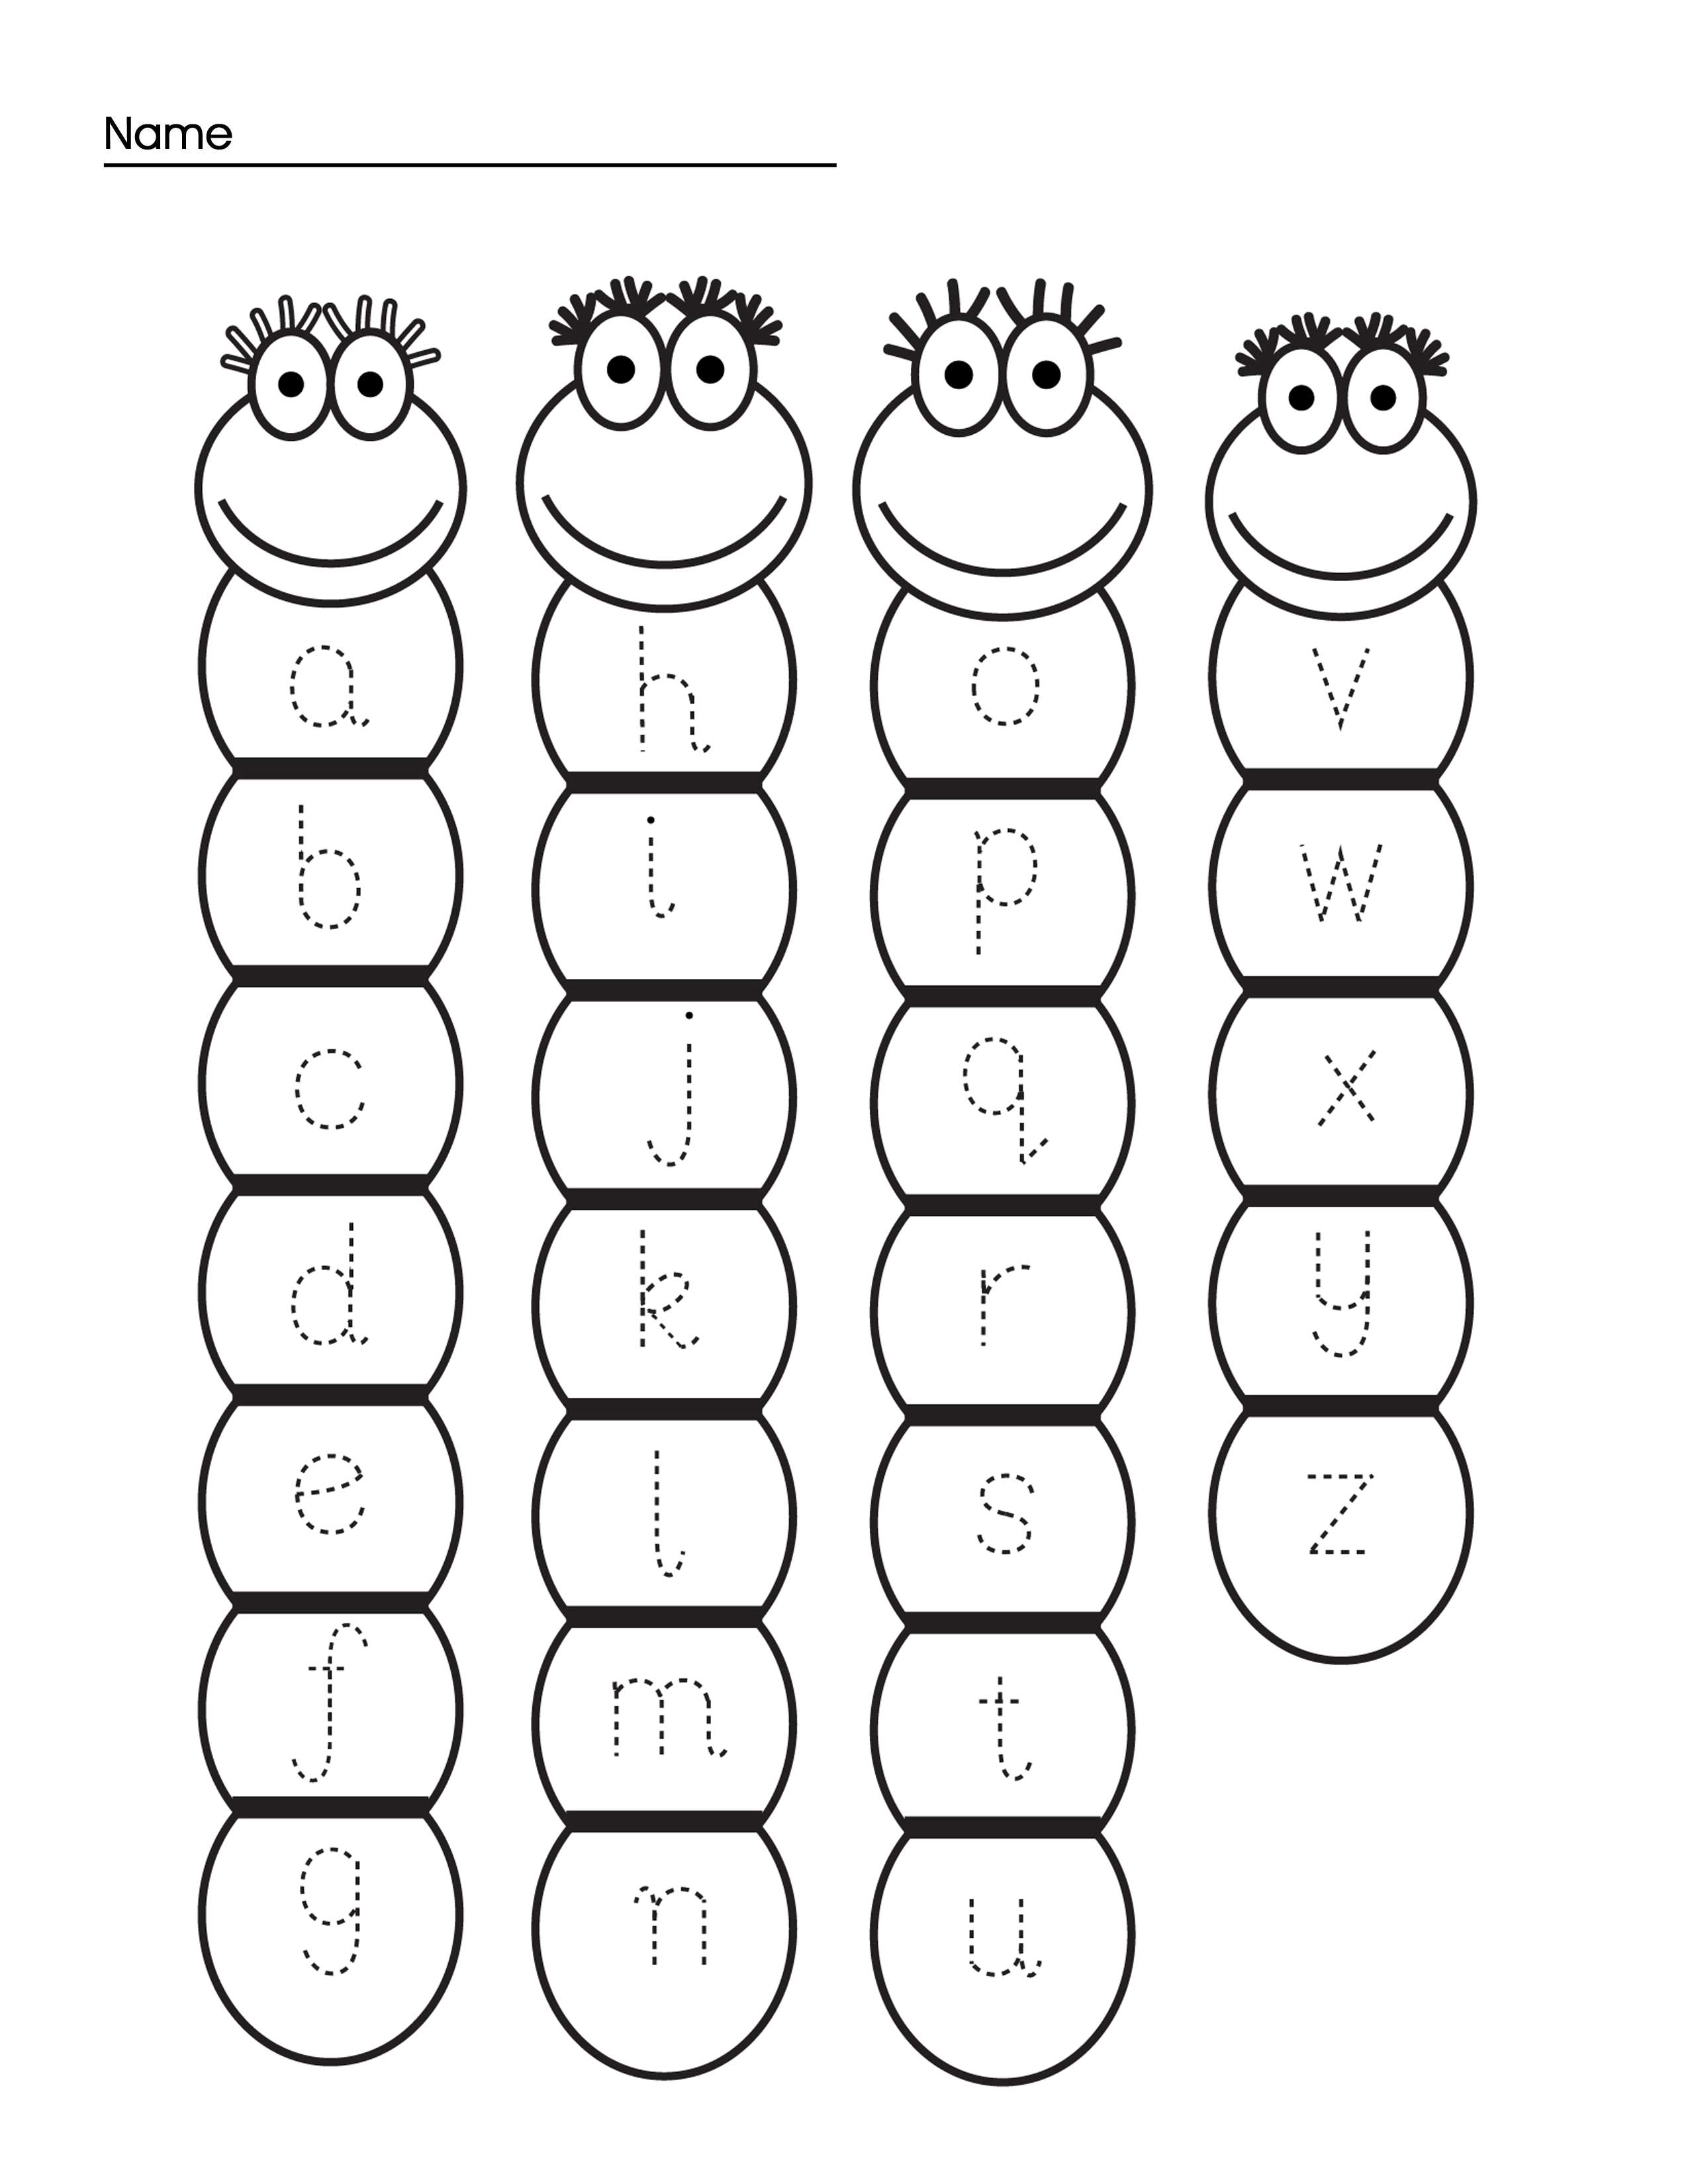 Letter tracing caterpillar preschool activity school page